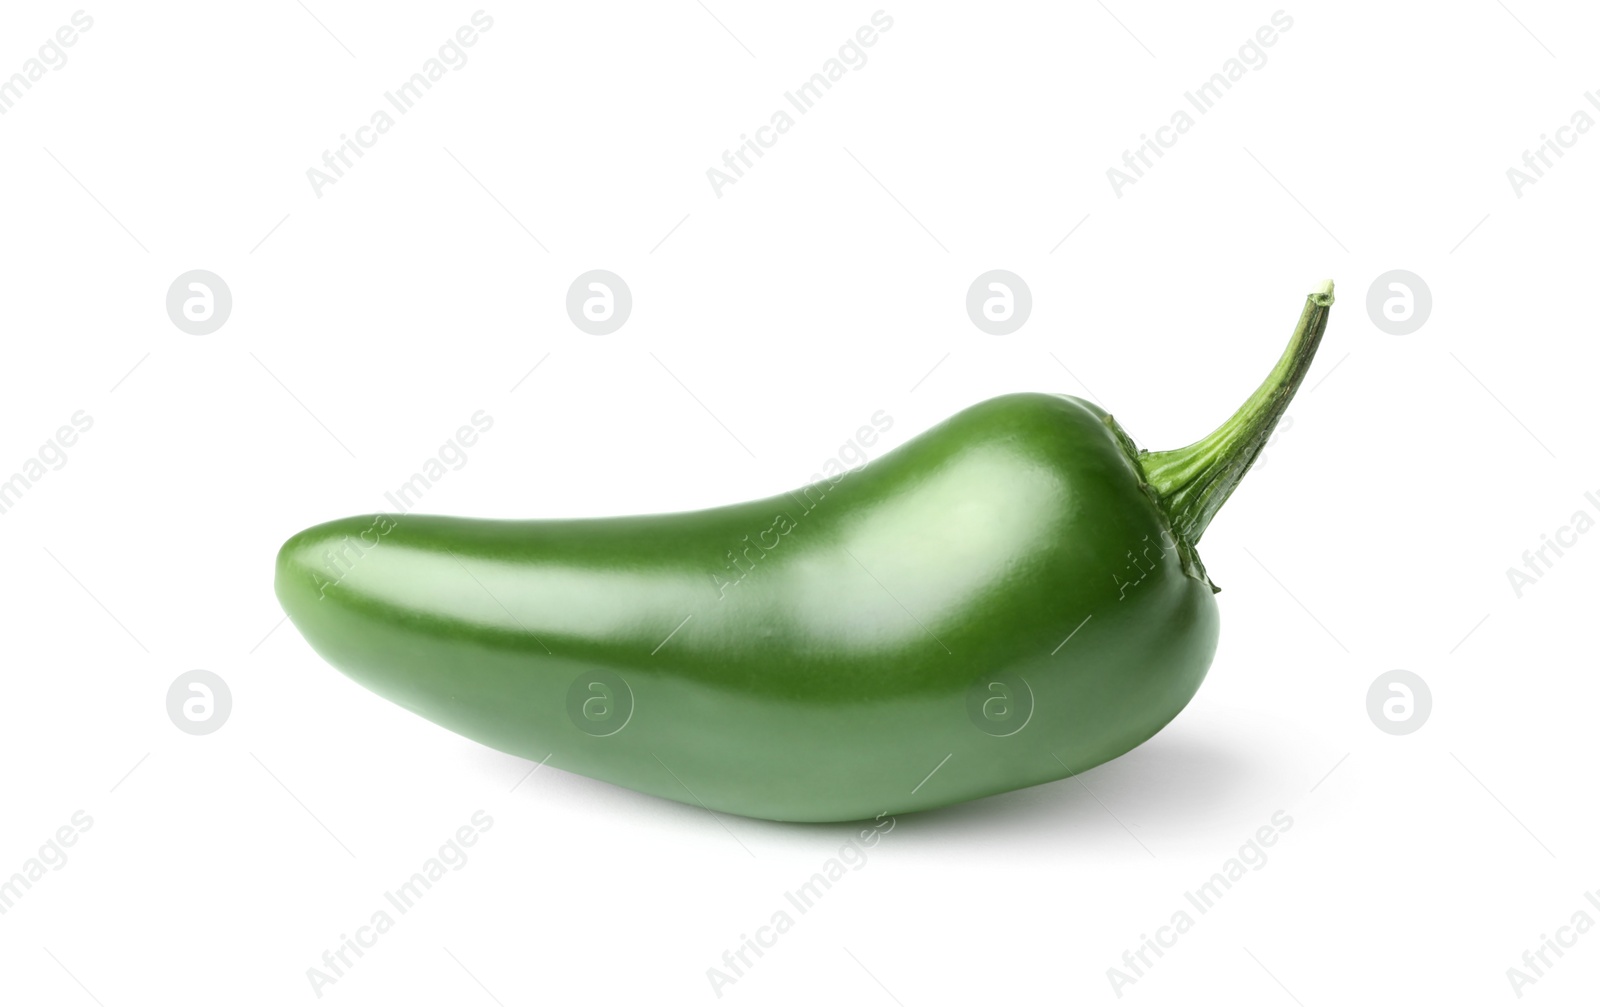 Photo of Ripe green hot chili pepper on white background